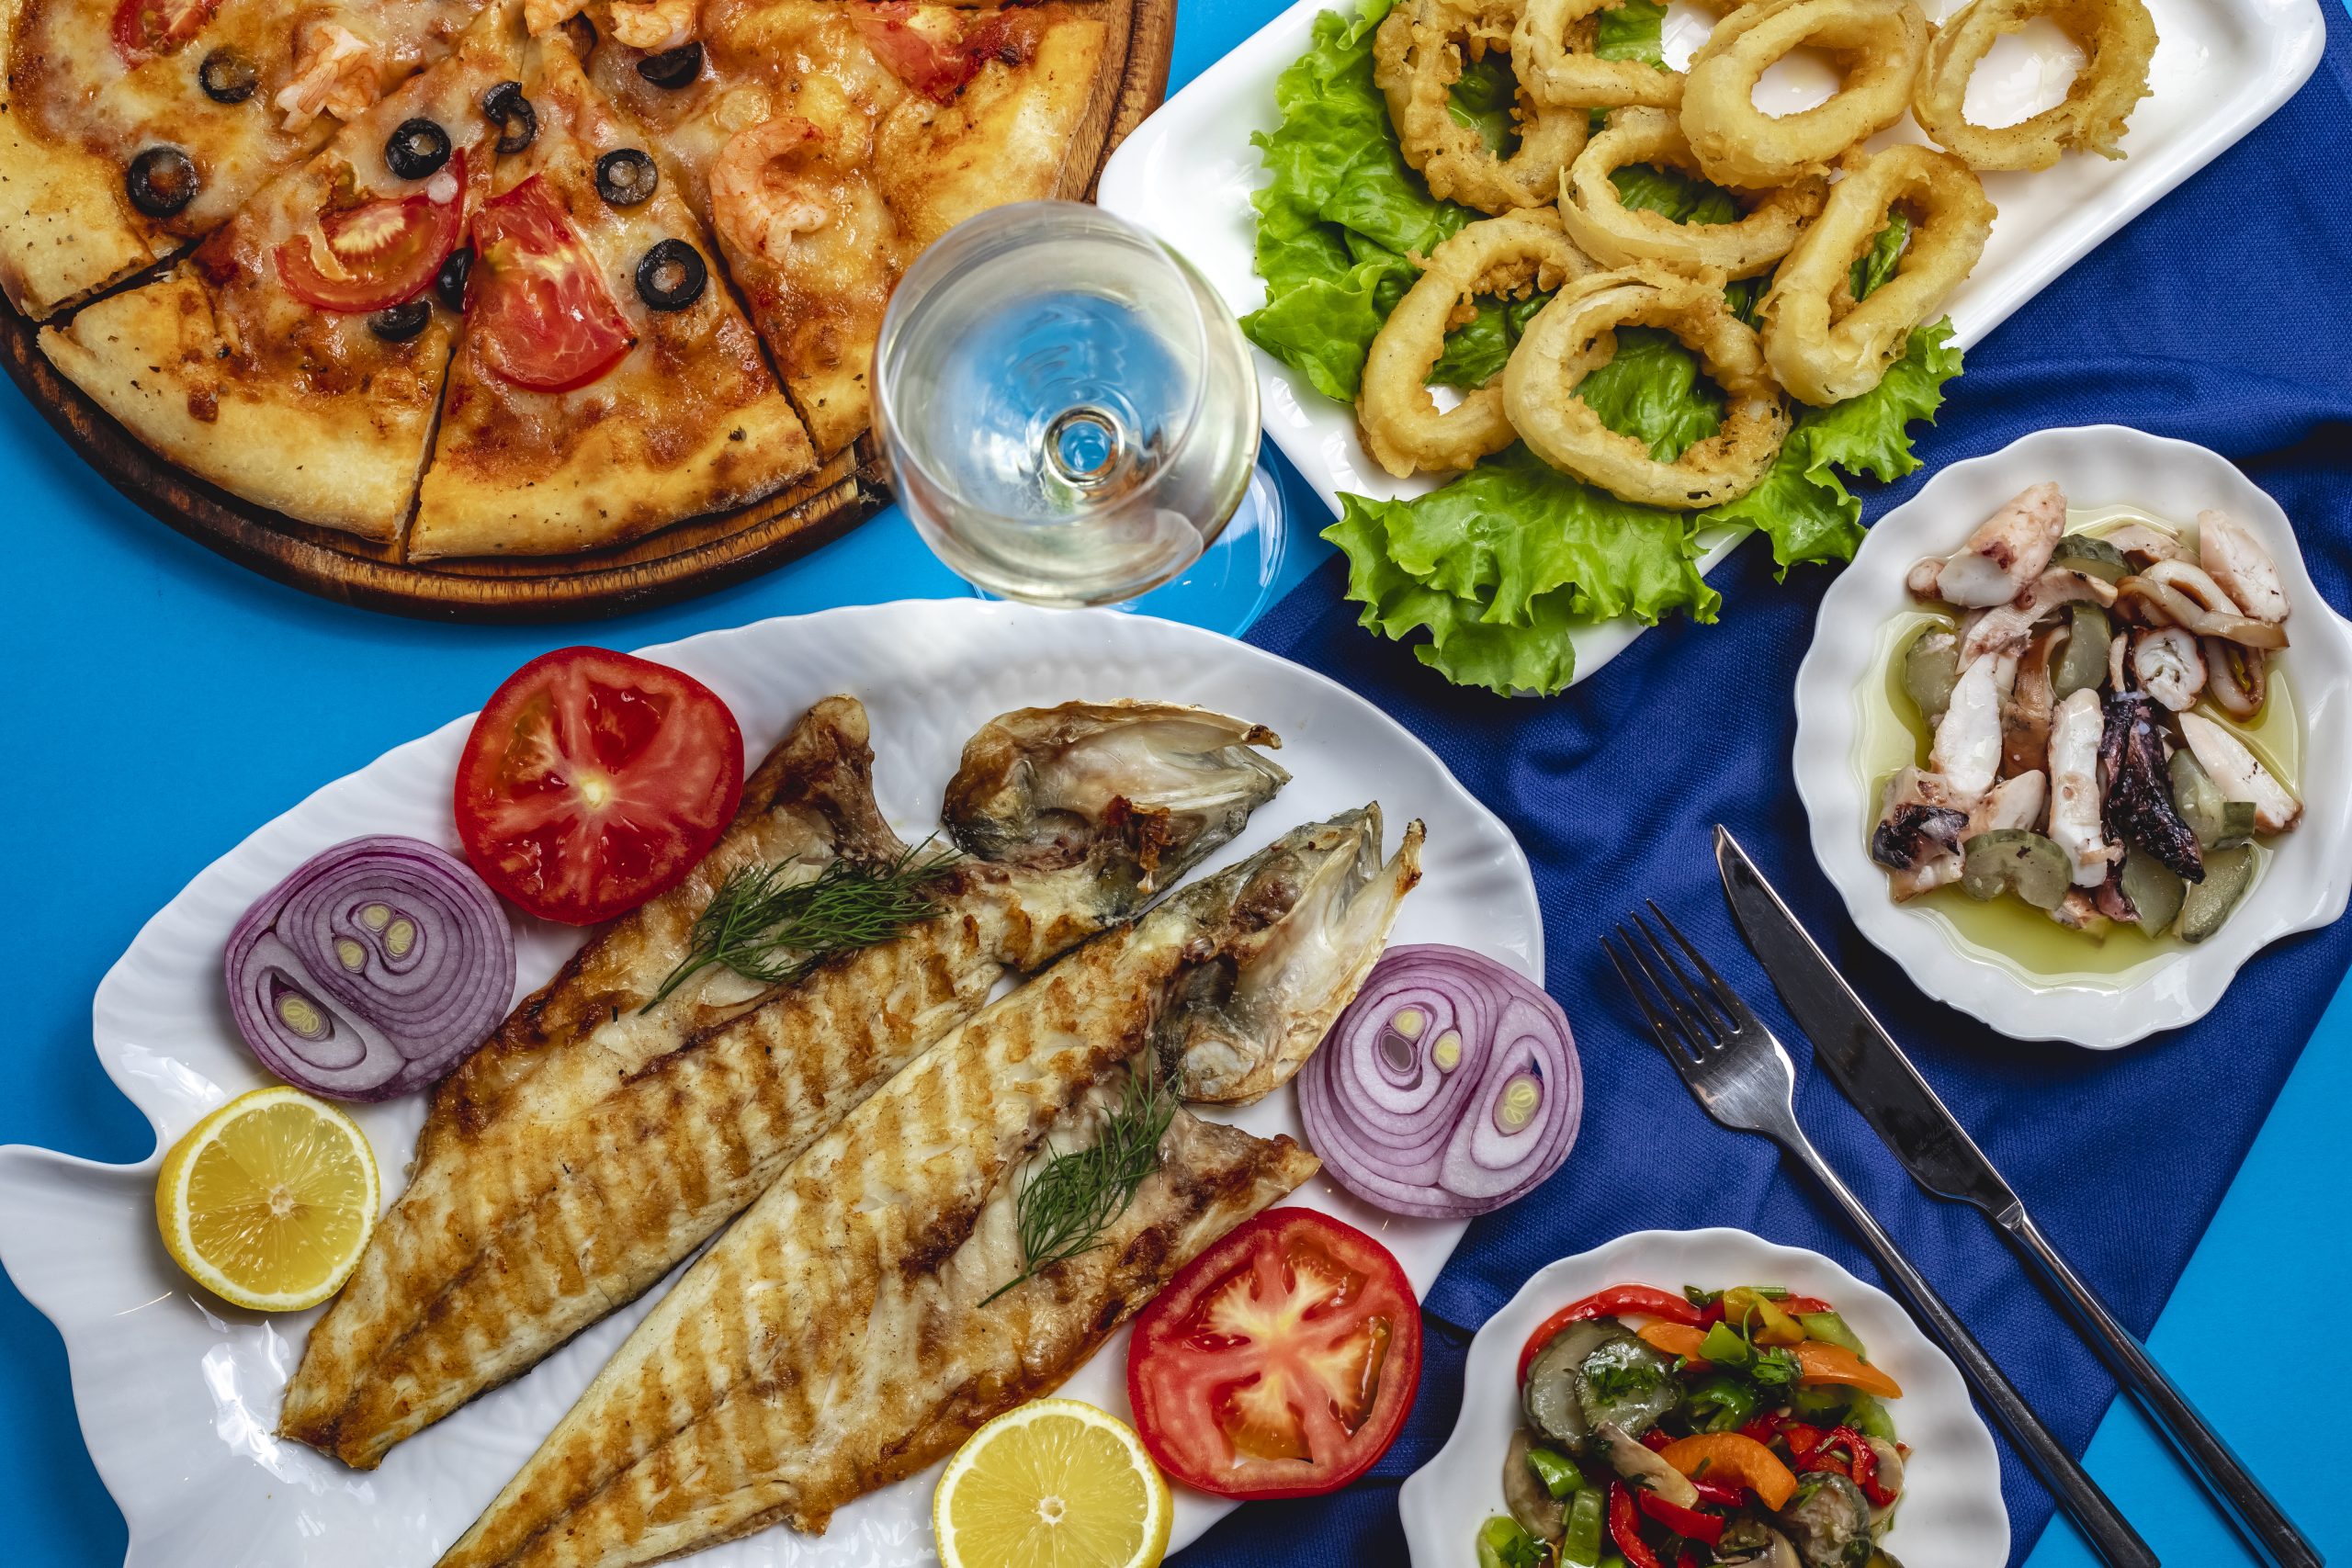 Top συμβουλές Διατροφής για το φαγητό στην ταβέρνα Είναι τα ψάρια η καλύτερη επιλογή 1 scaled - Συμβουλές διατροφής για την ταβέρνα: Ποια είναι η καλύτερη επιλογή του μενού;